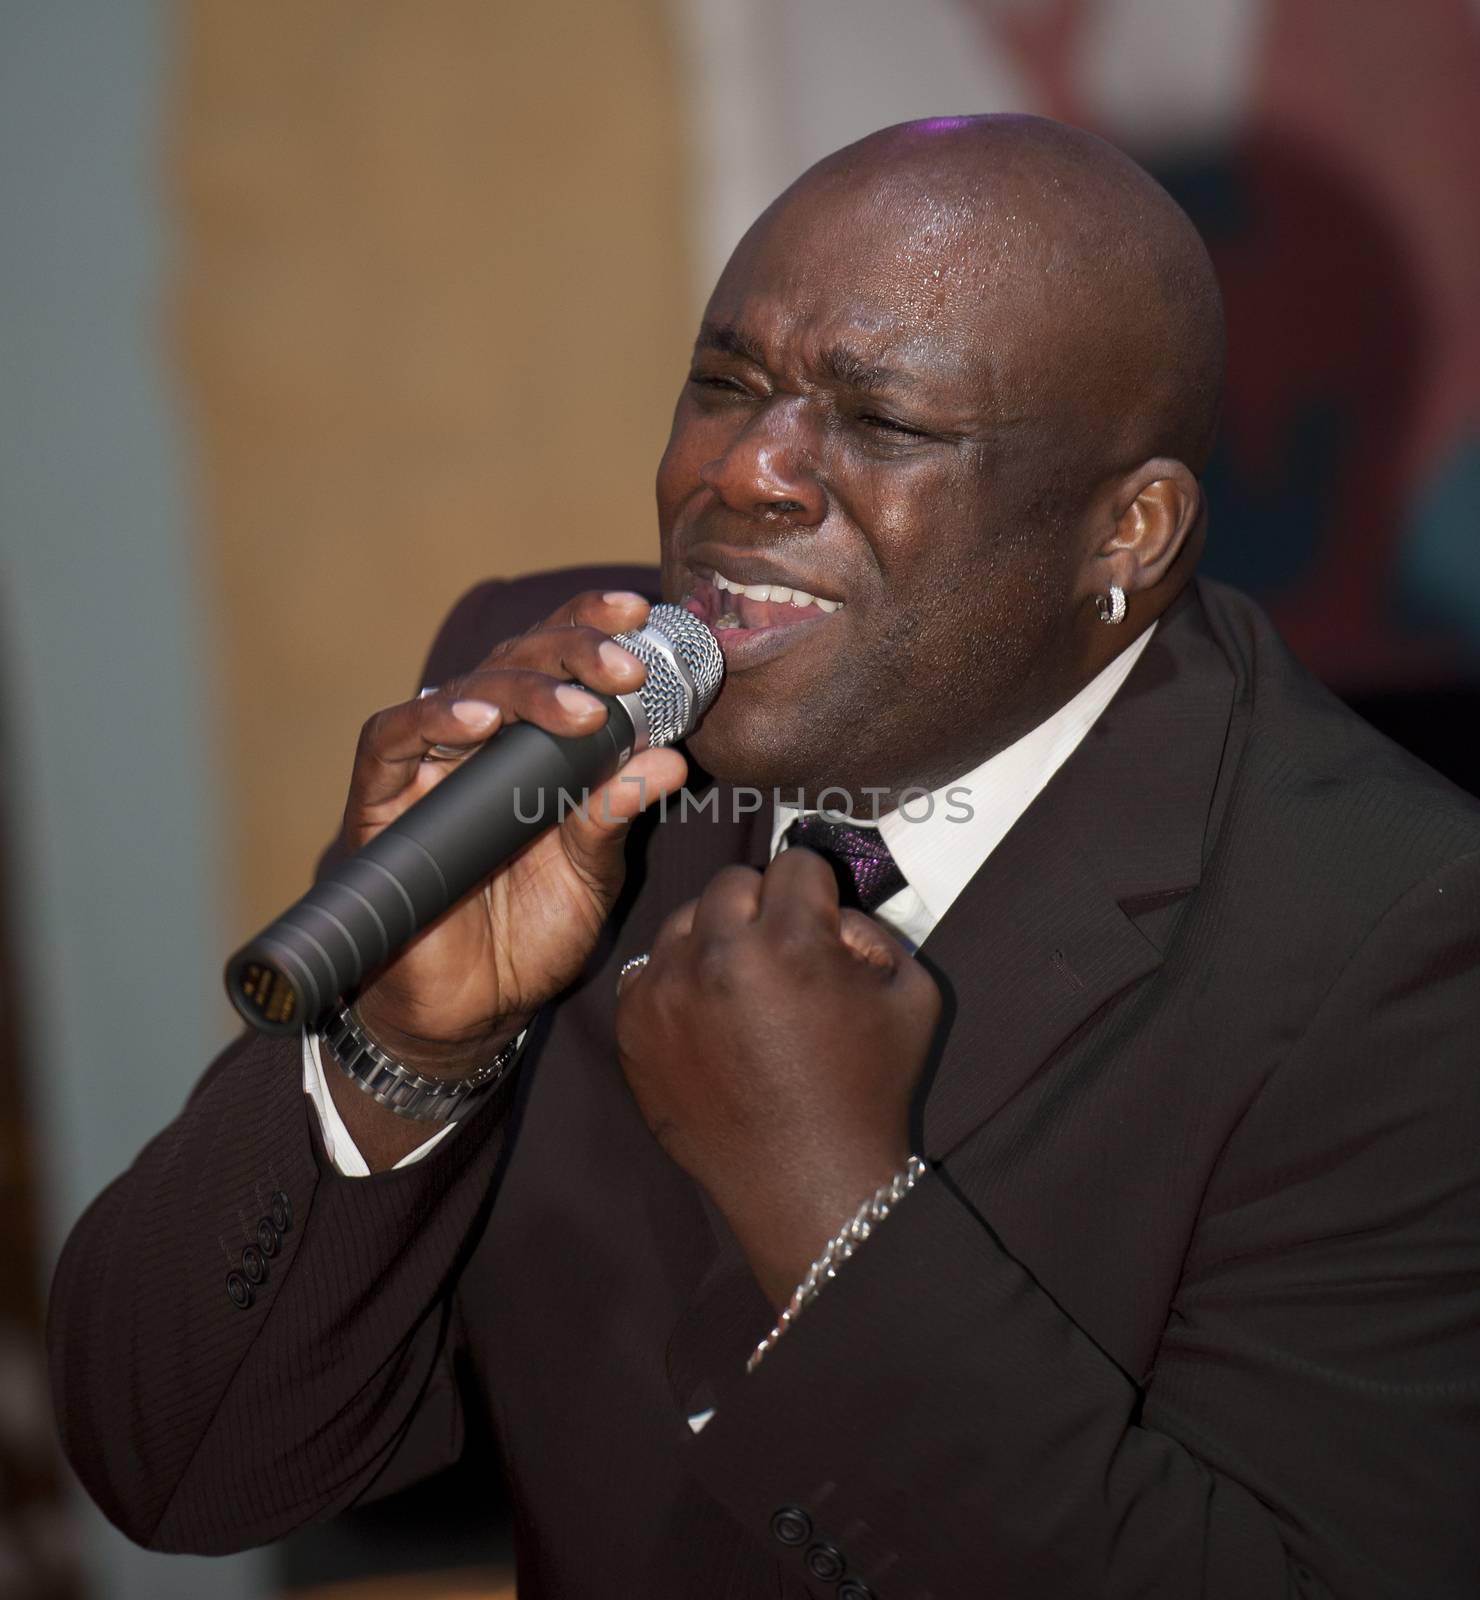 African man singing live by paulvinten